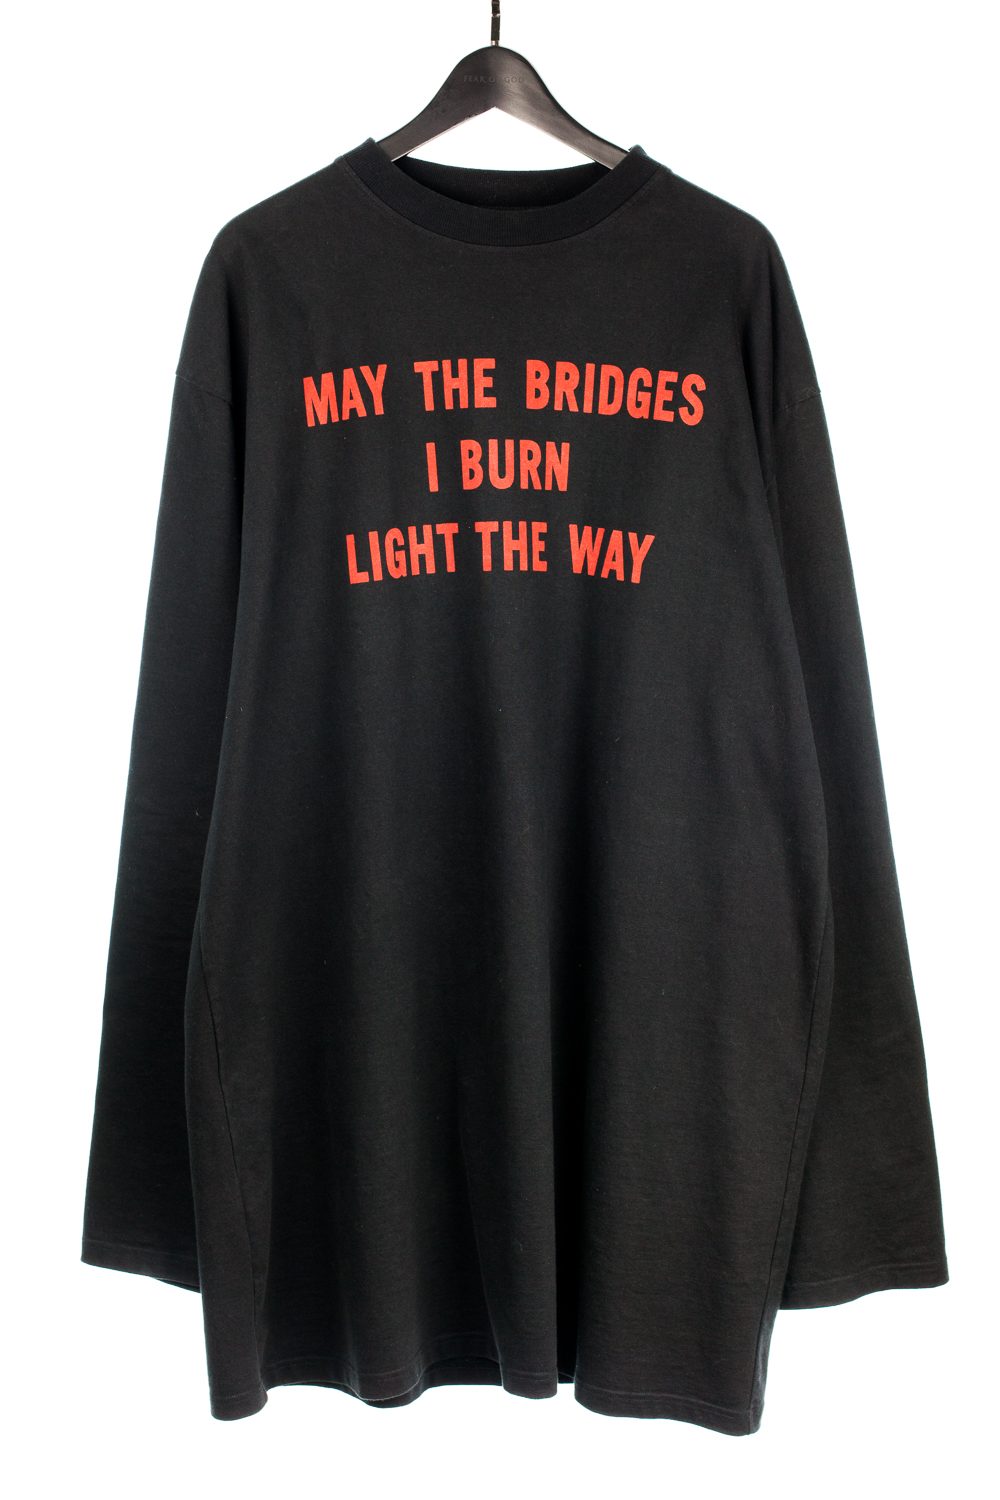 FW17 “May The Bridges I Burn Light The Way” Thick L/S